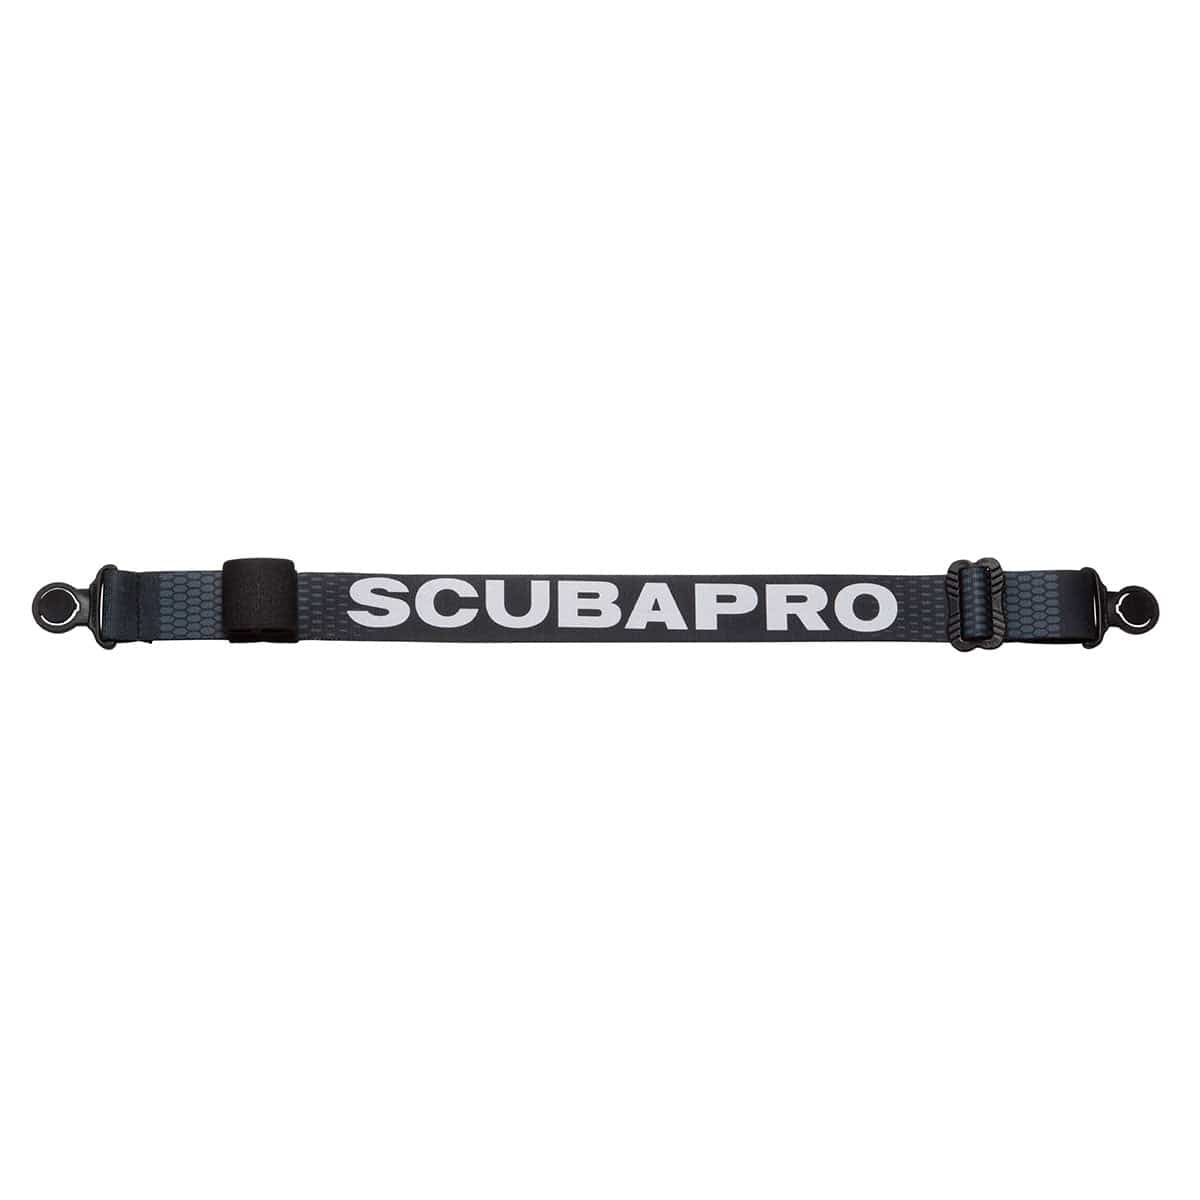 Scubapro Comfort Strap - Black - 1